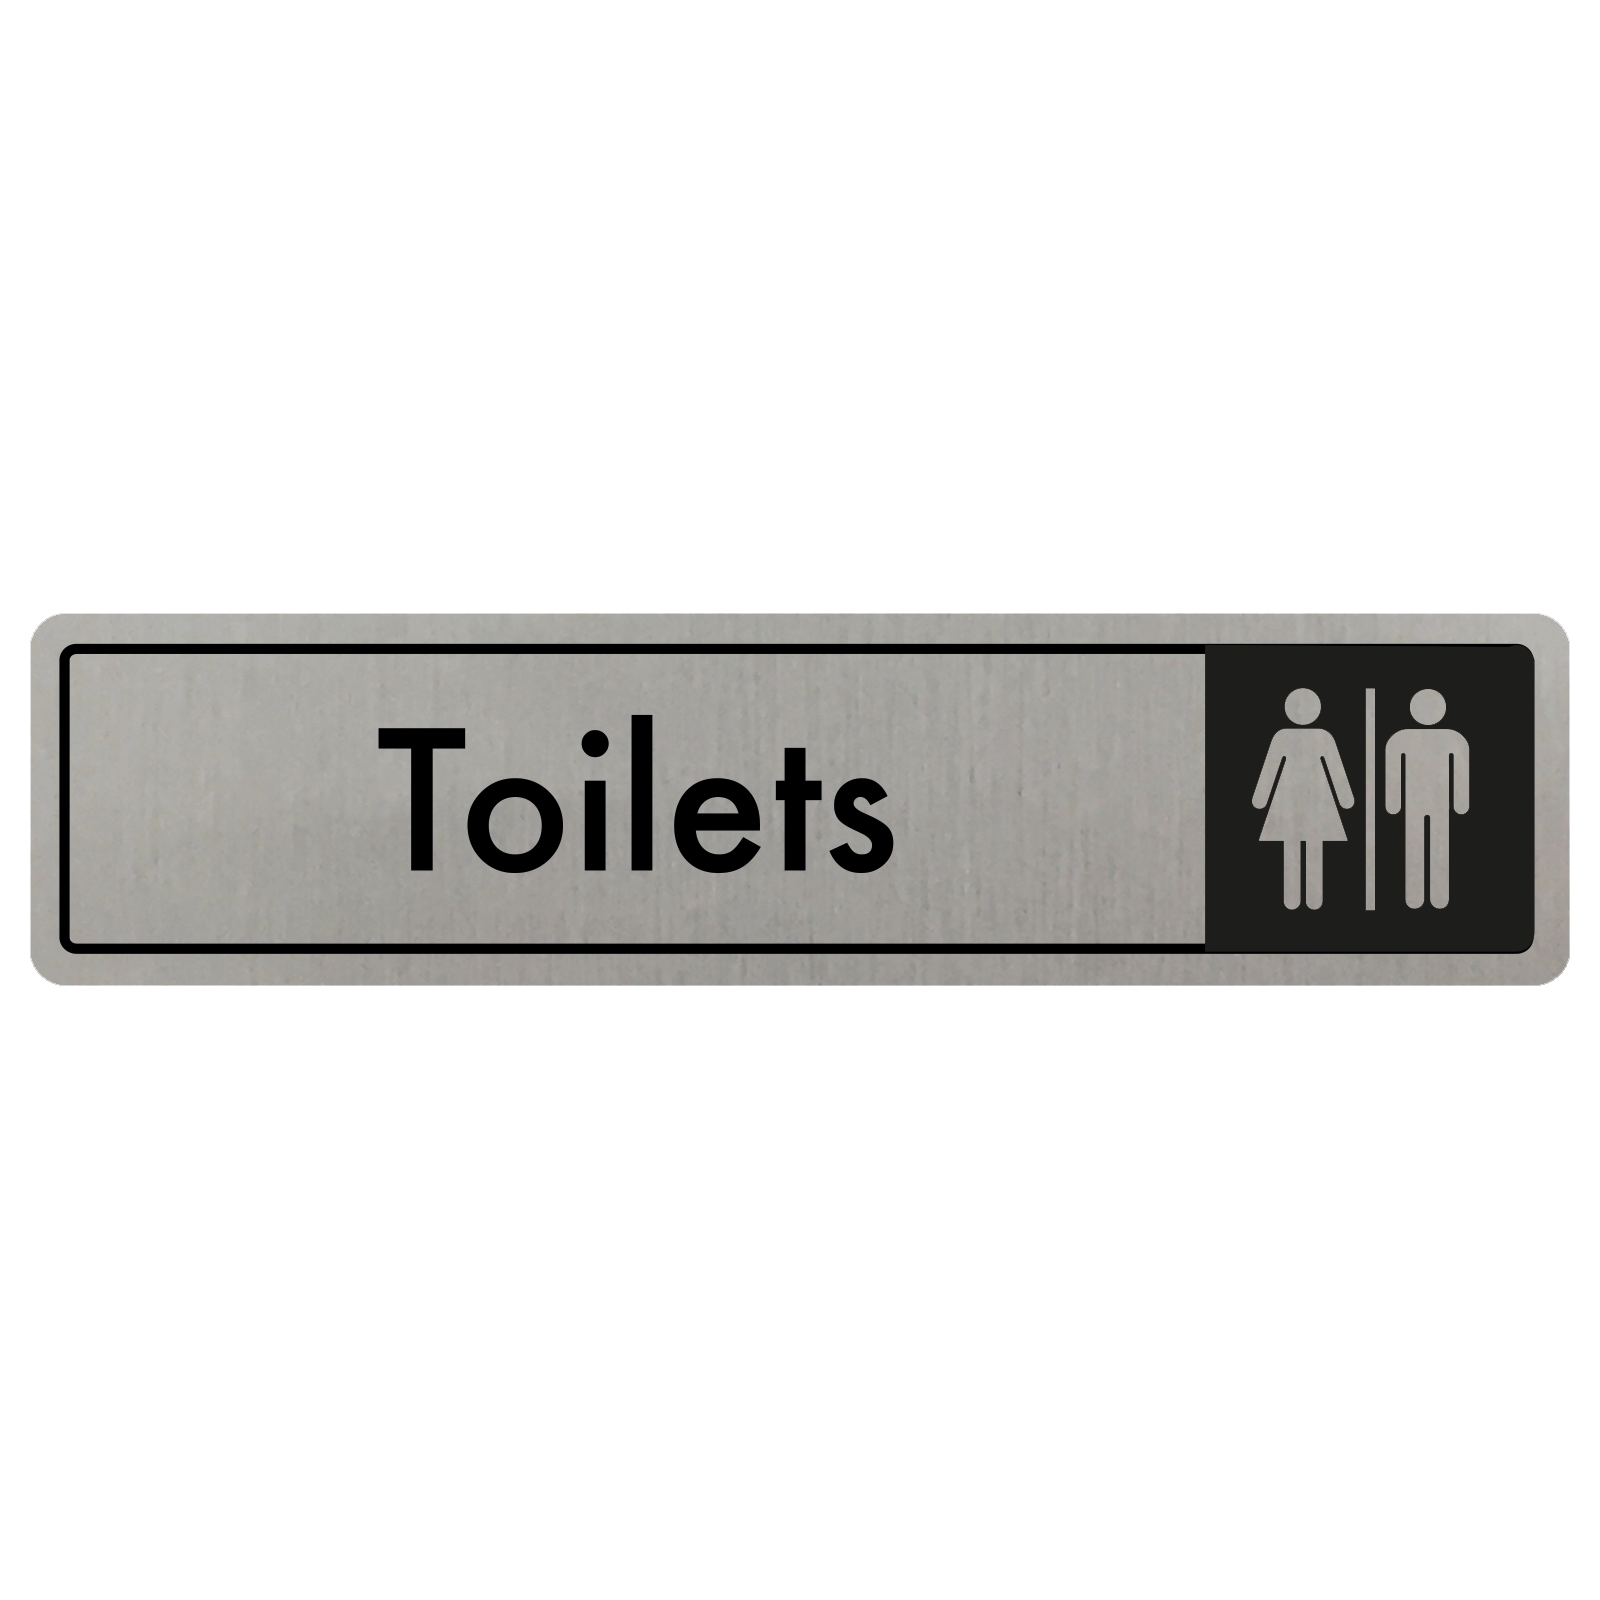 Toilets Door Sign - Black on Silver